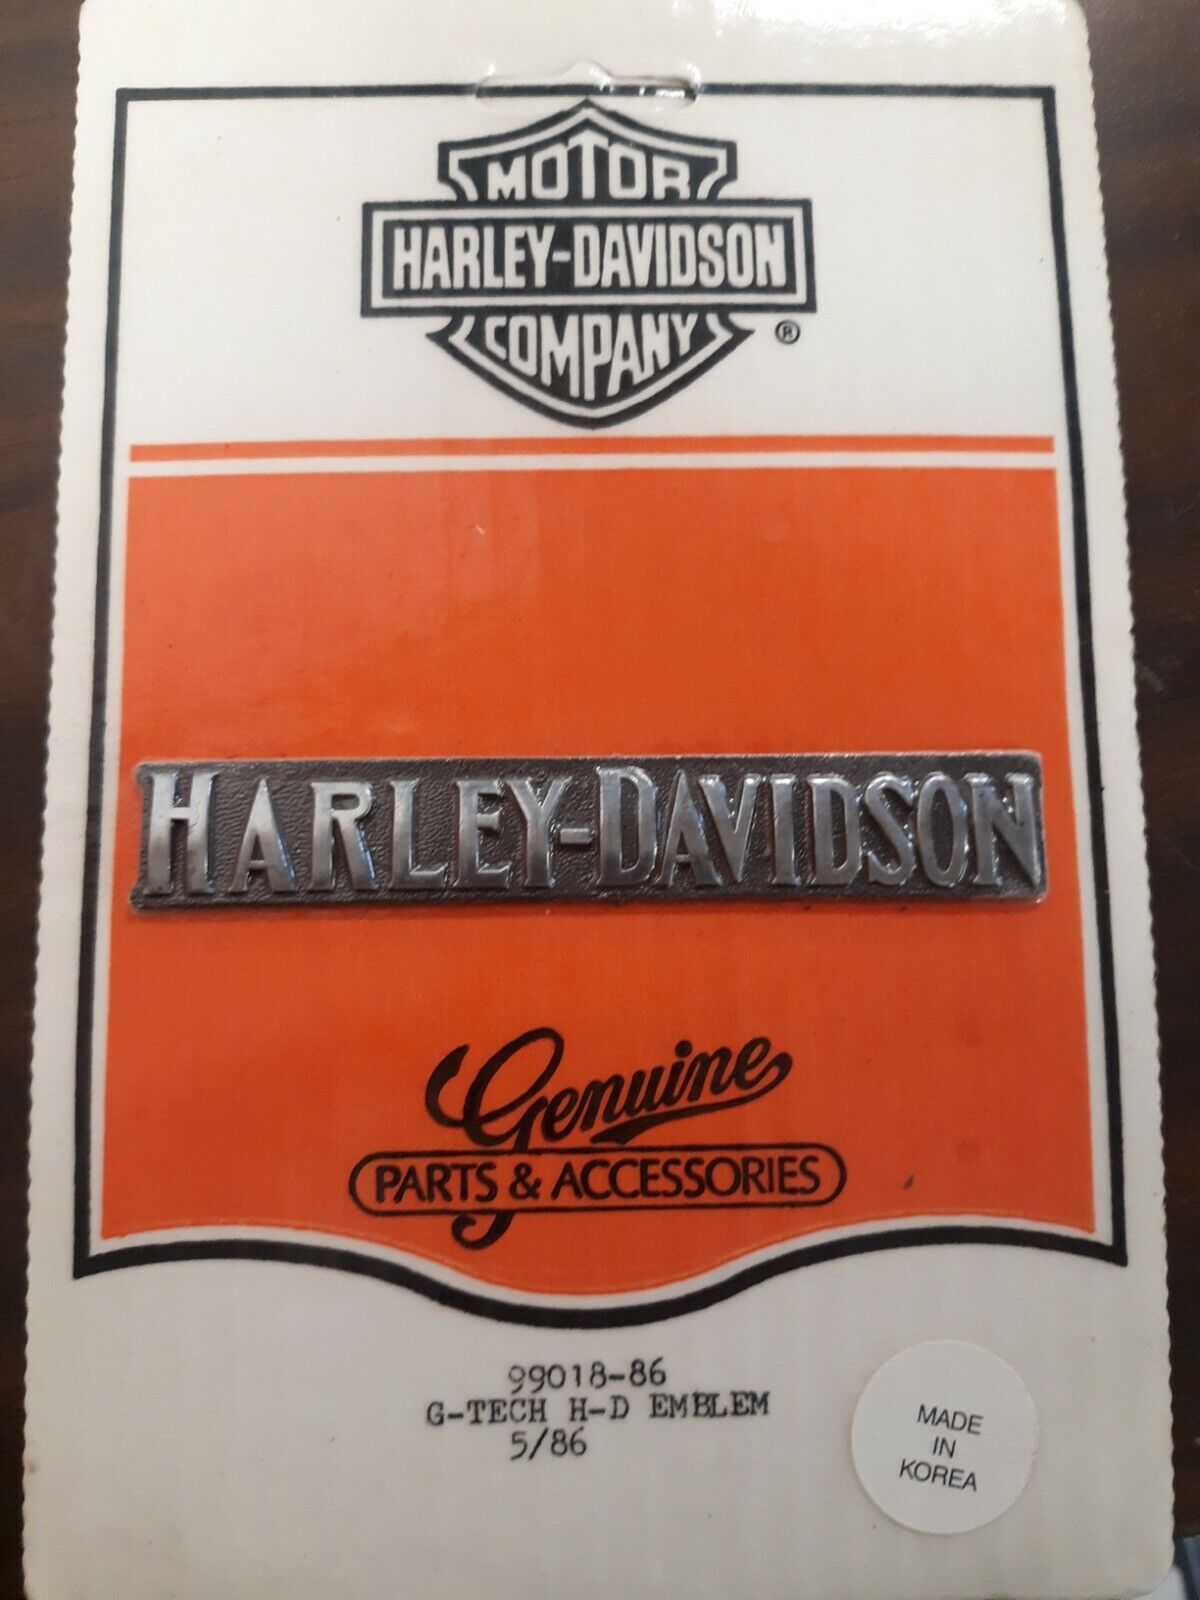 Harley Davidson G Tech Emblem 99018-86